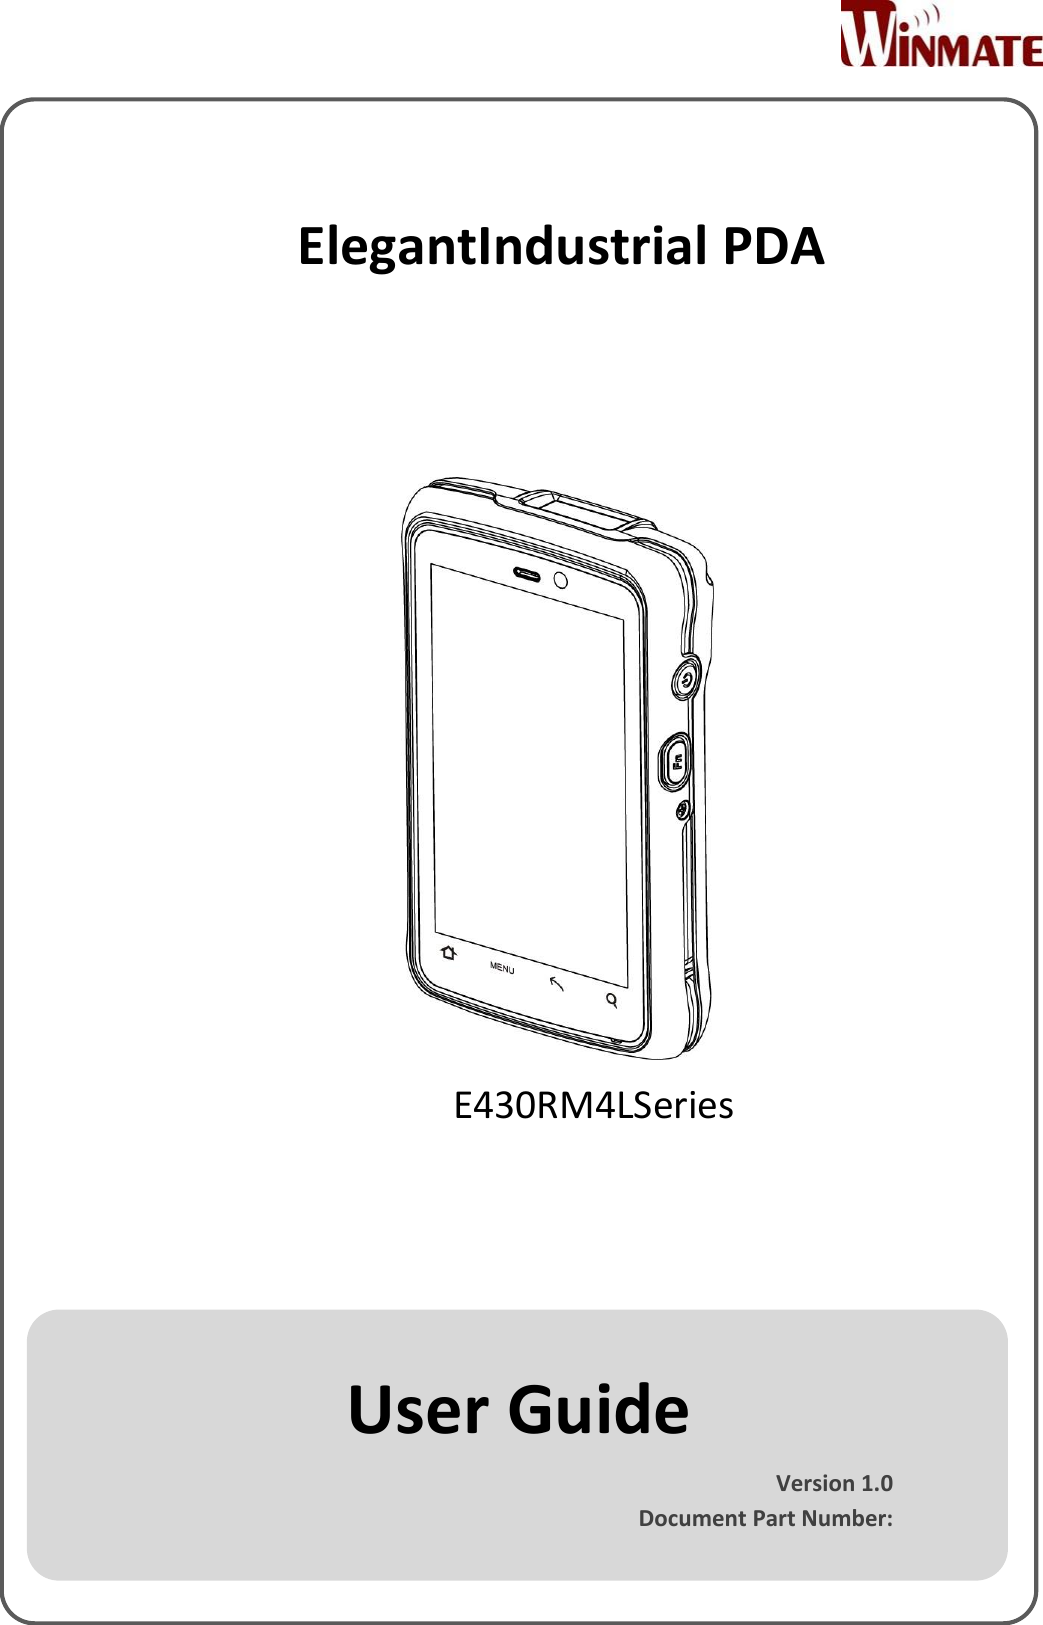    E430RM4LSeries     ElegantIndustrial PDA                          User Guide Version 1.0 Document Part Number:  